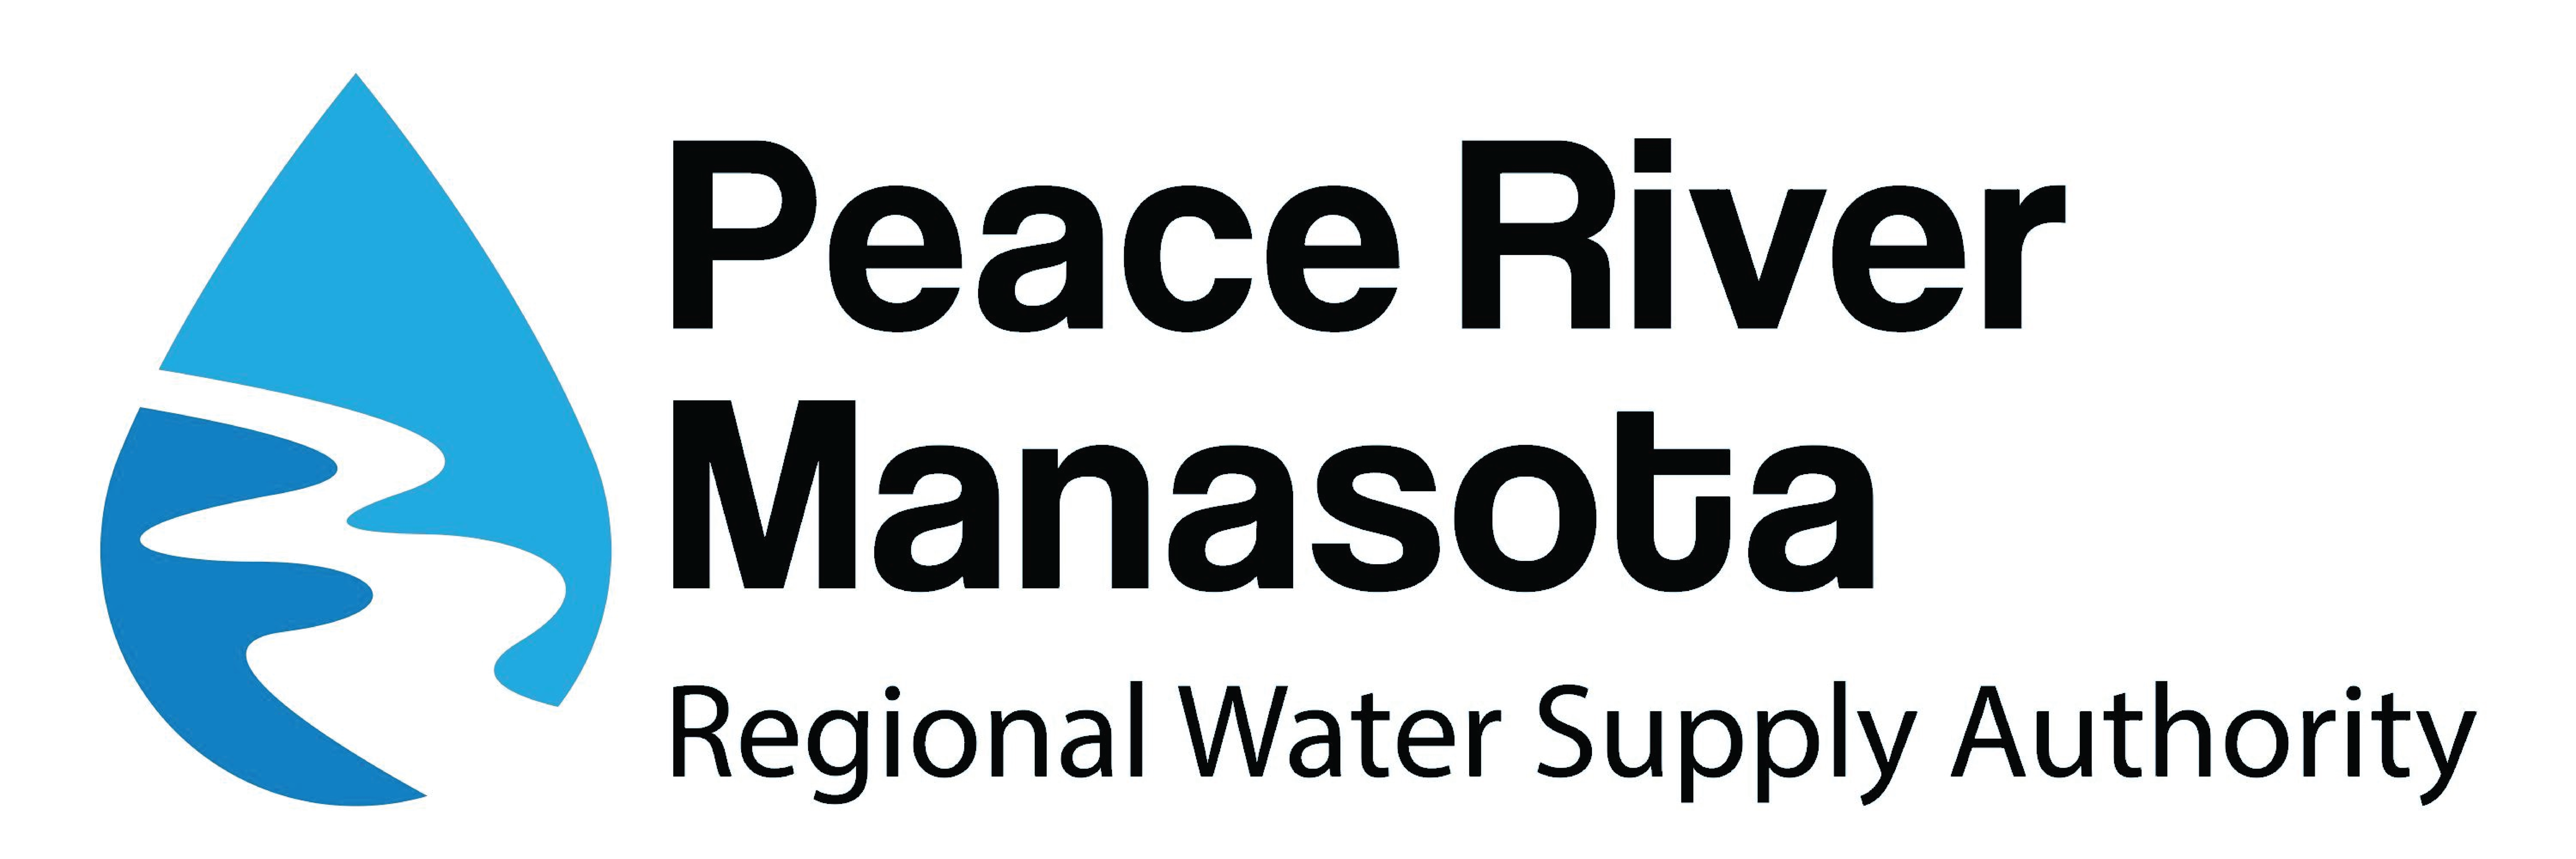 Peace River Manasota